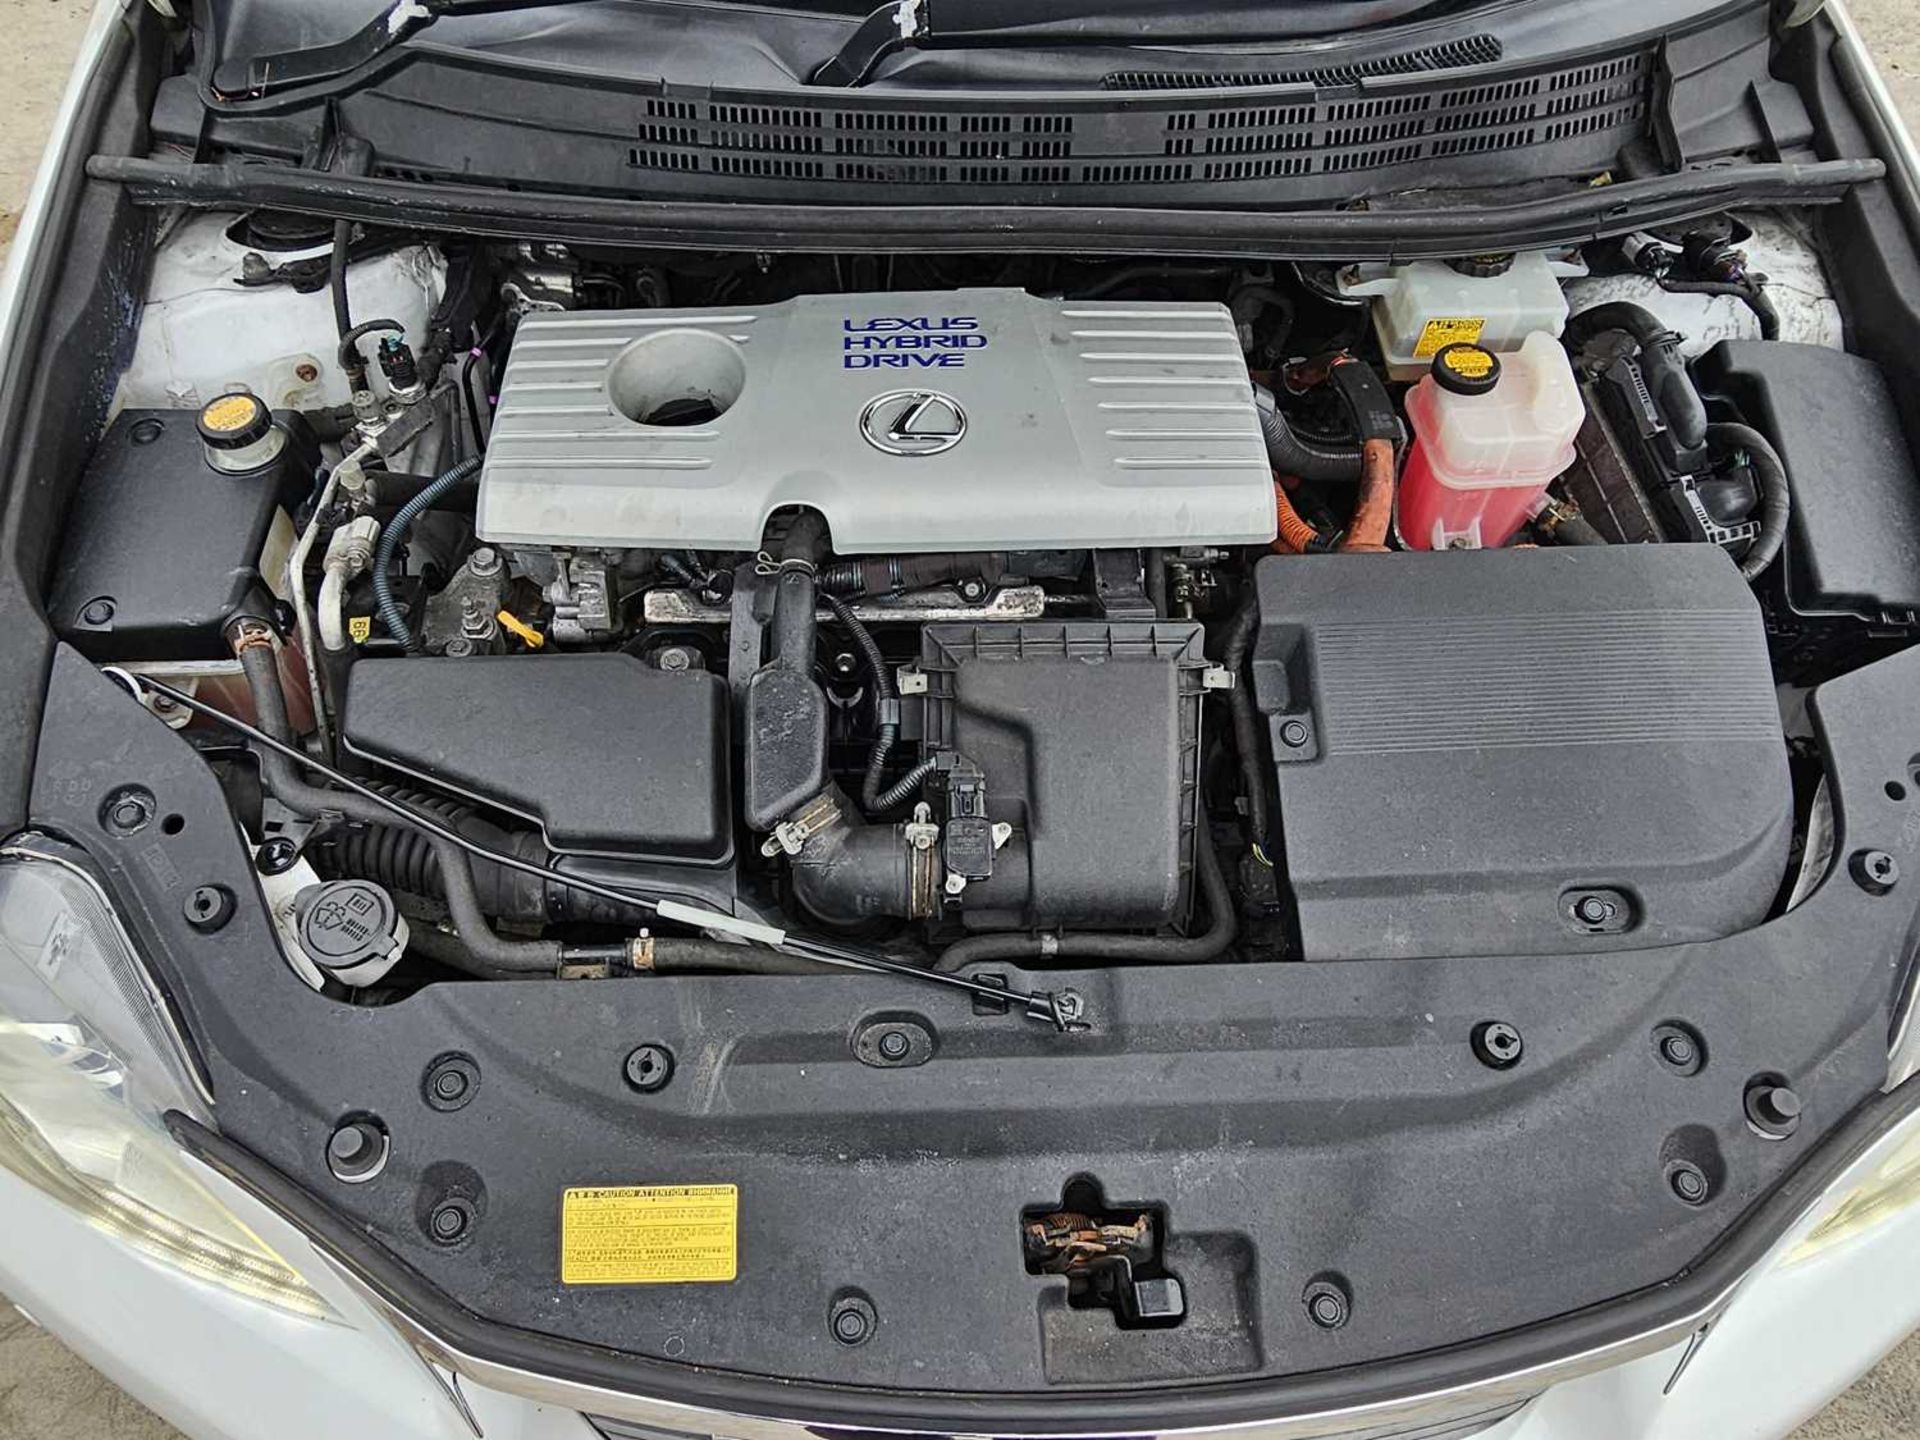 2011 Lexus CT200H Se-L Cvt Hybrid, Auto, Full Leather, Heated Seats, Bluetooth (NO VAT)(Reg. Docs. A - Image 13 of 26